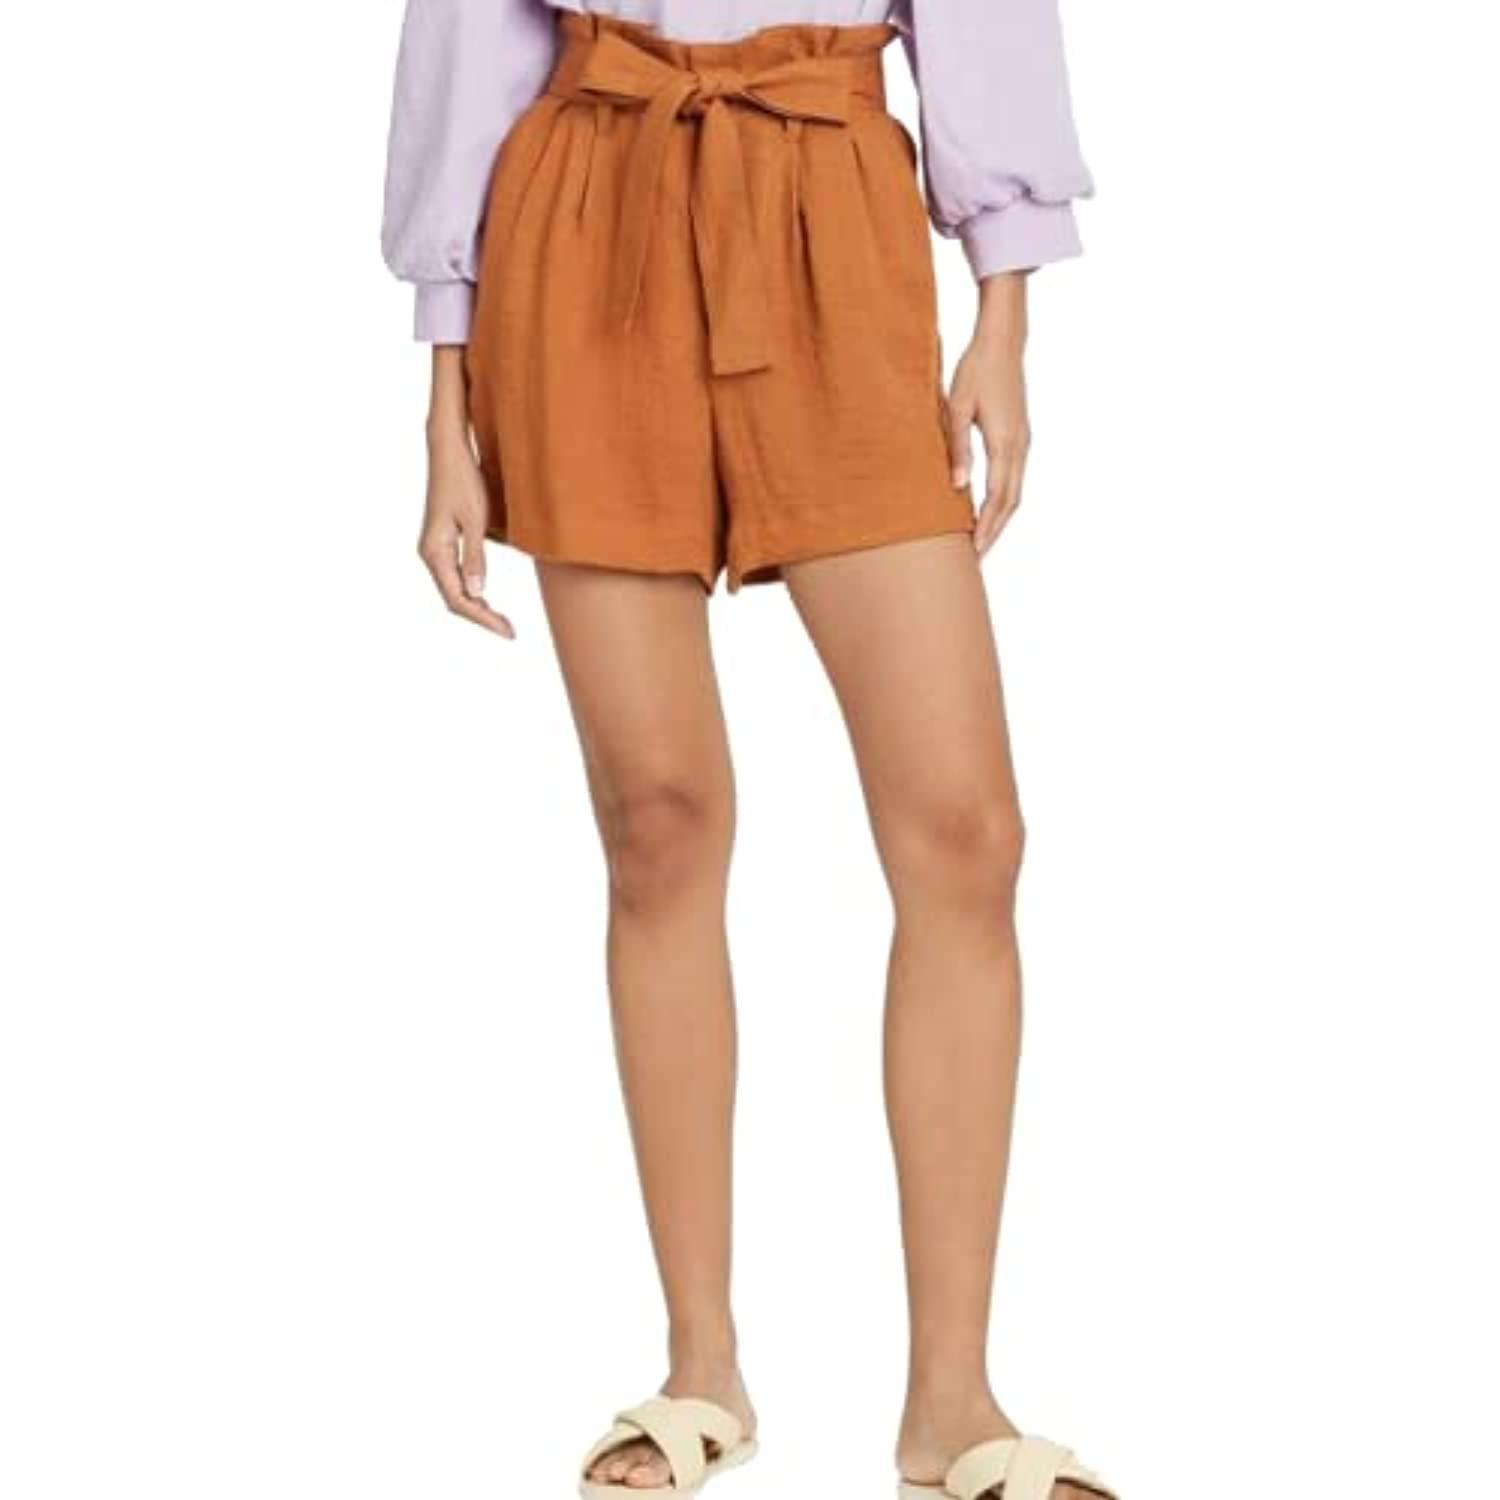 LUSH Brown Shorts - Paperbag Waist Shorts - High-Waisted Shorts